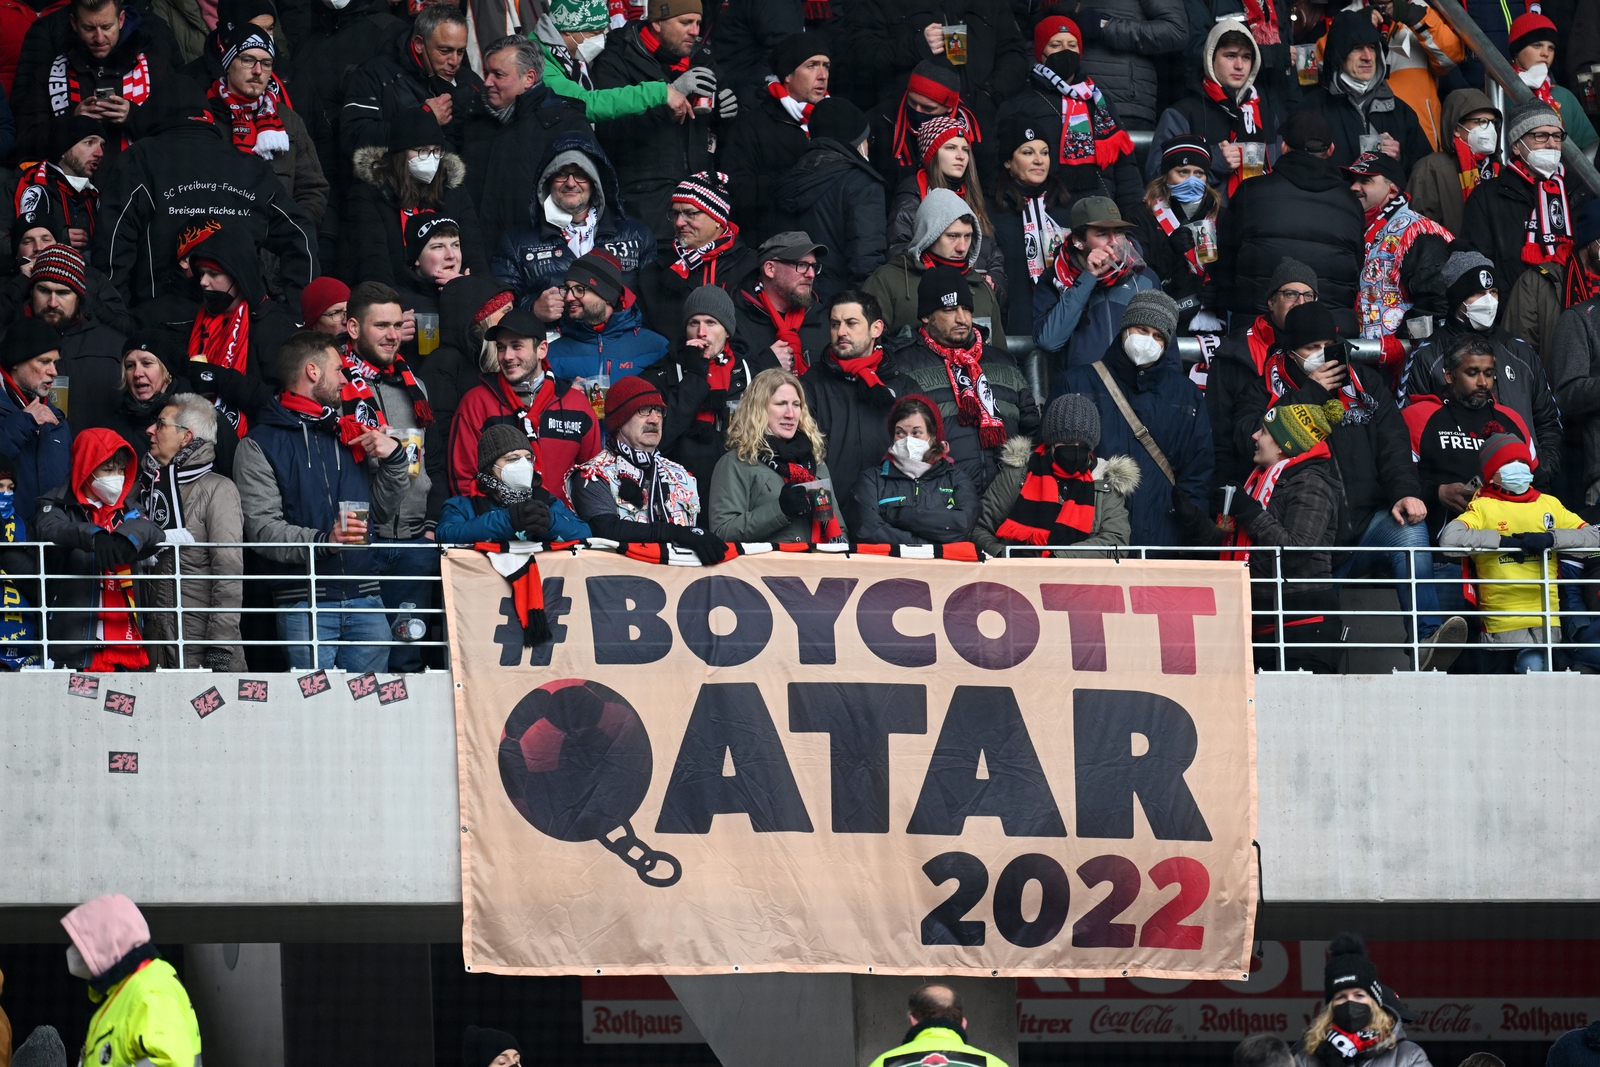 Countryhumans React To Fifa World Cup Qatar 2022, Late